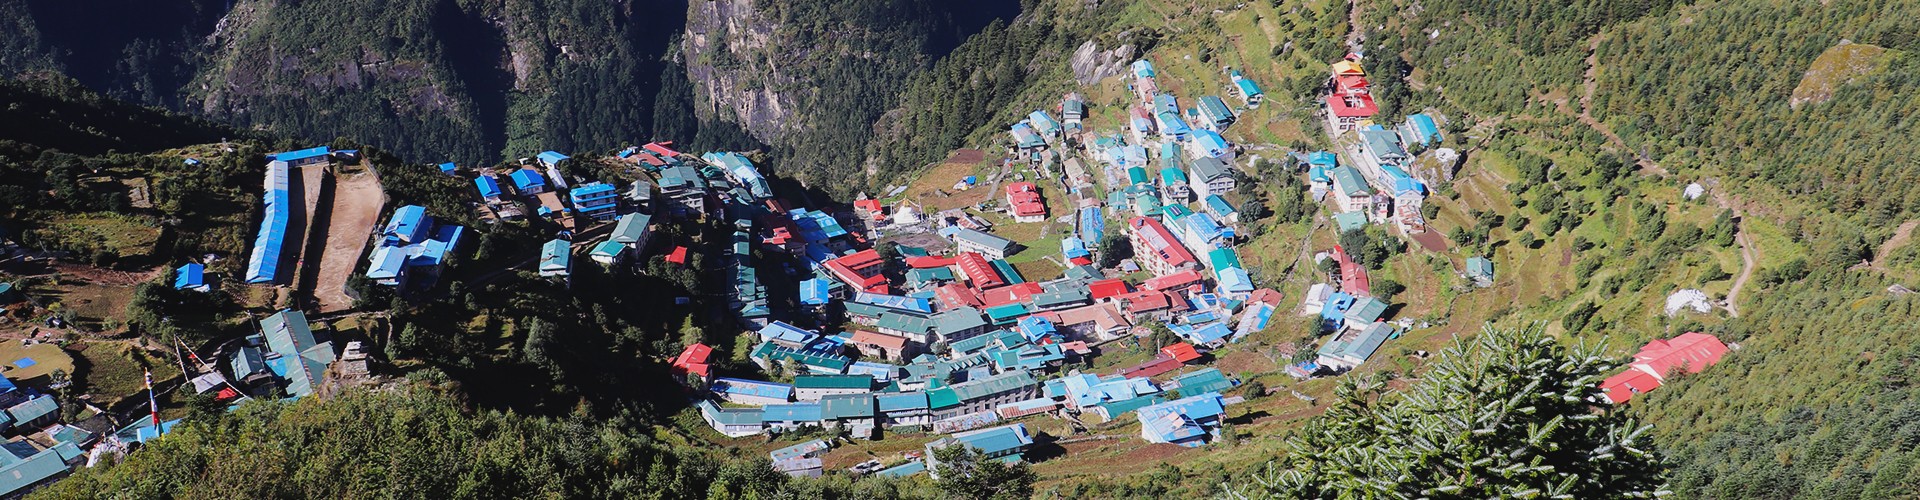 Namche Bazaar, A Popular Sherpa Capital in Everet Region